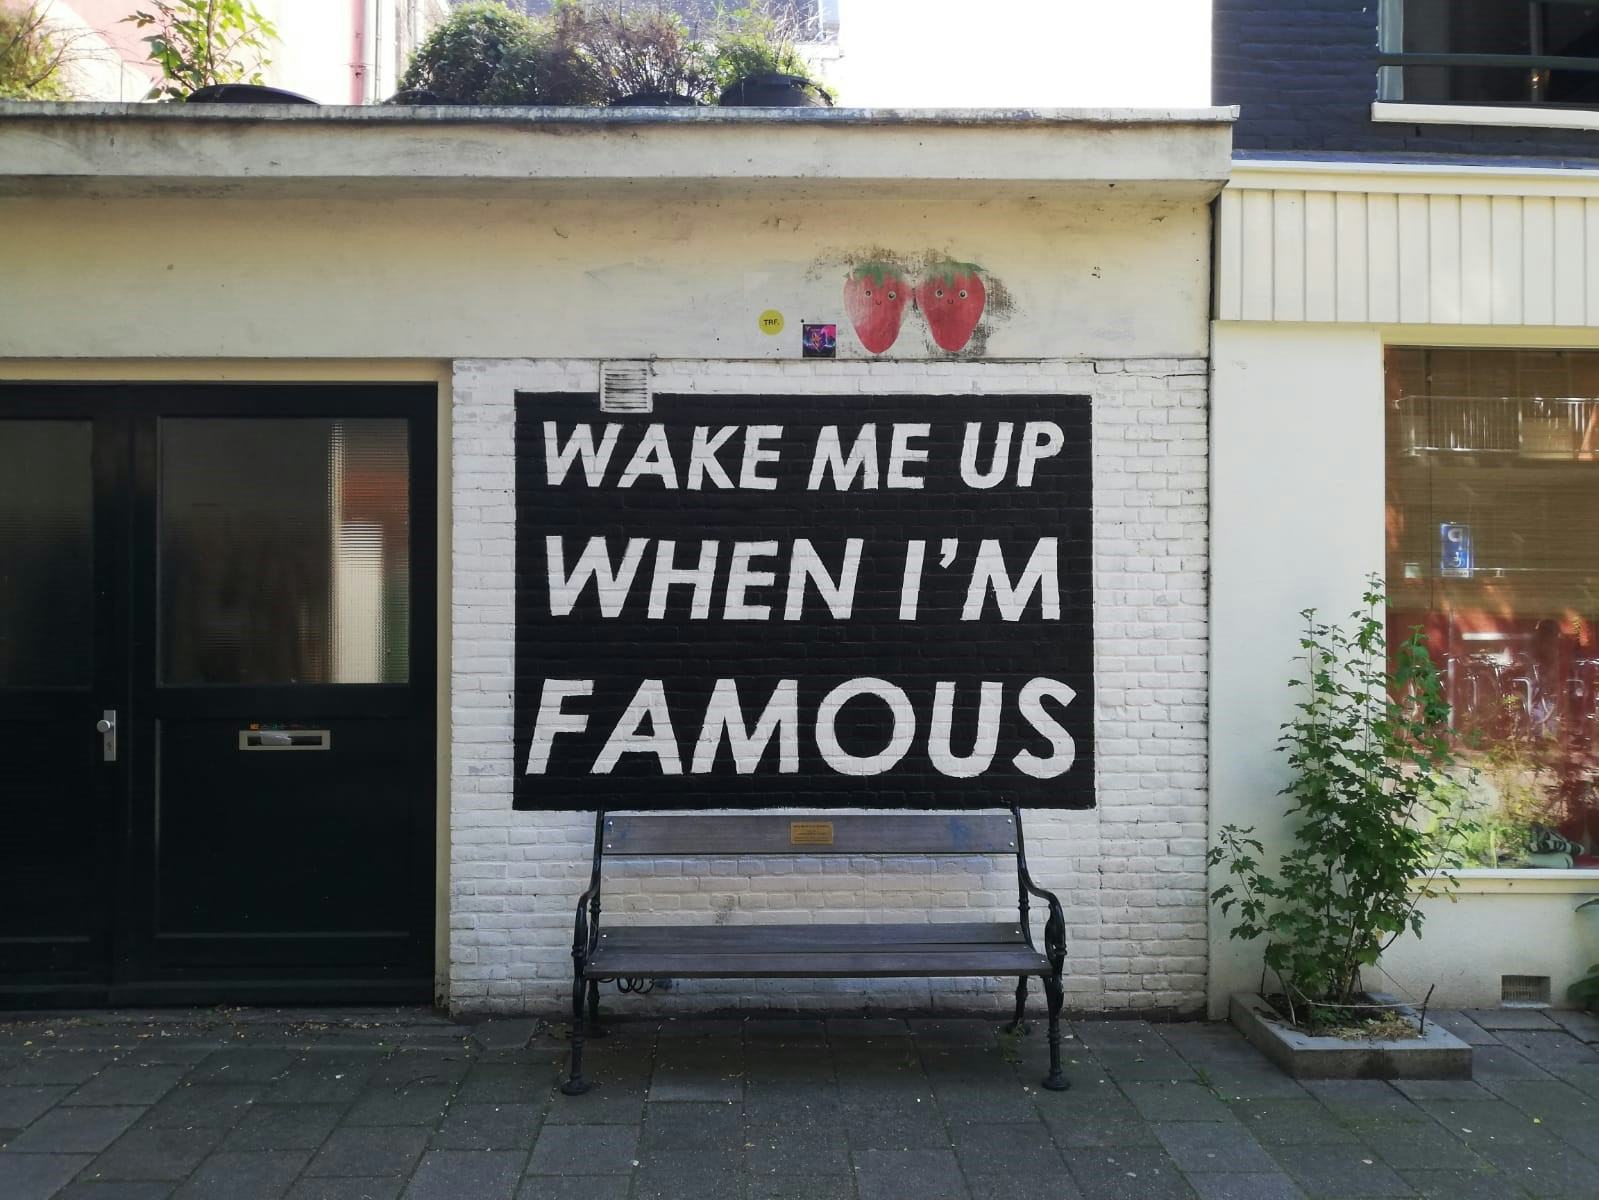 Wake me up when I'm famous bankje in Amsterdam. Beeld Jan van Vlerken